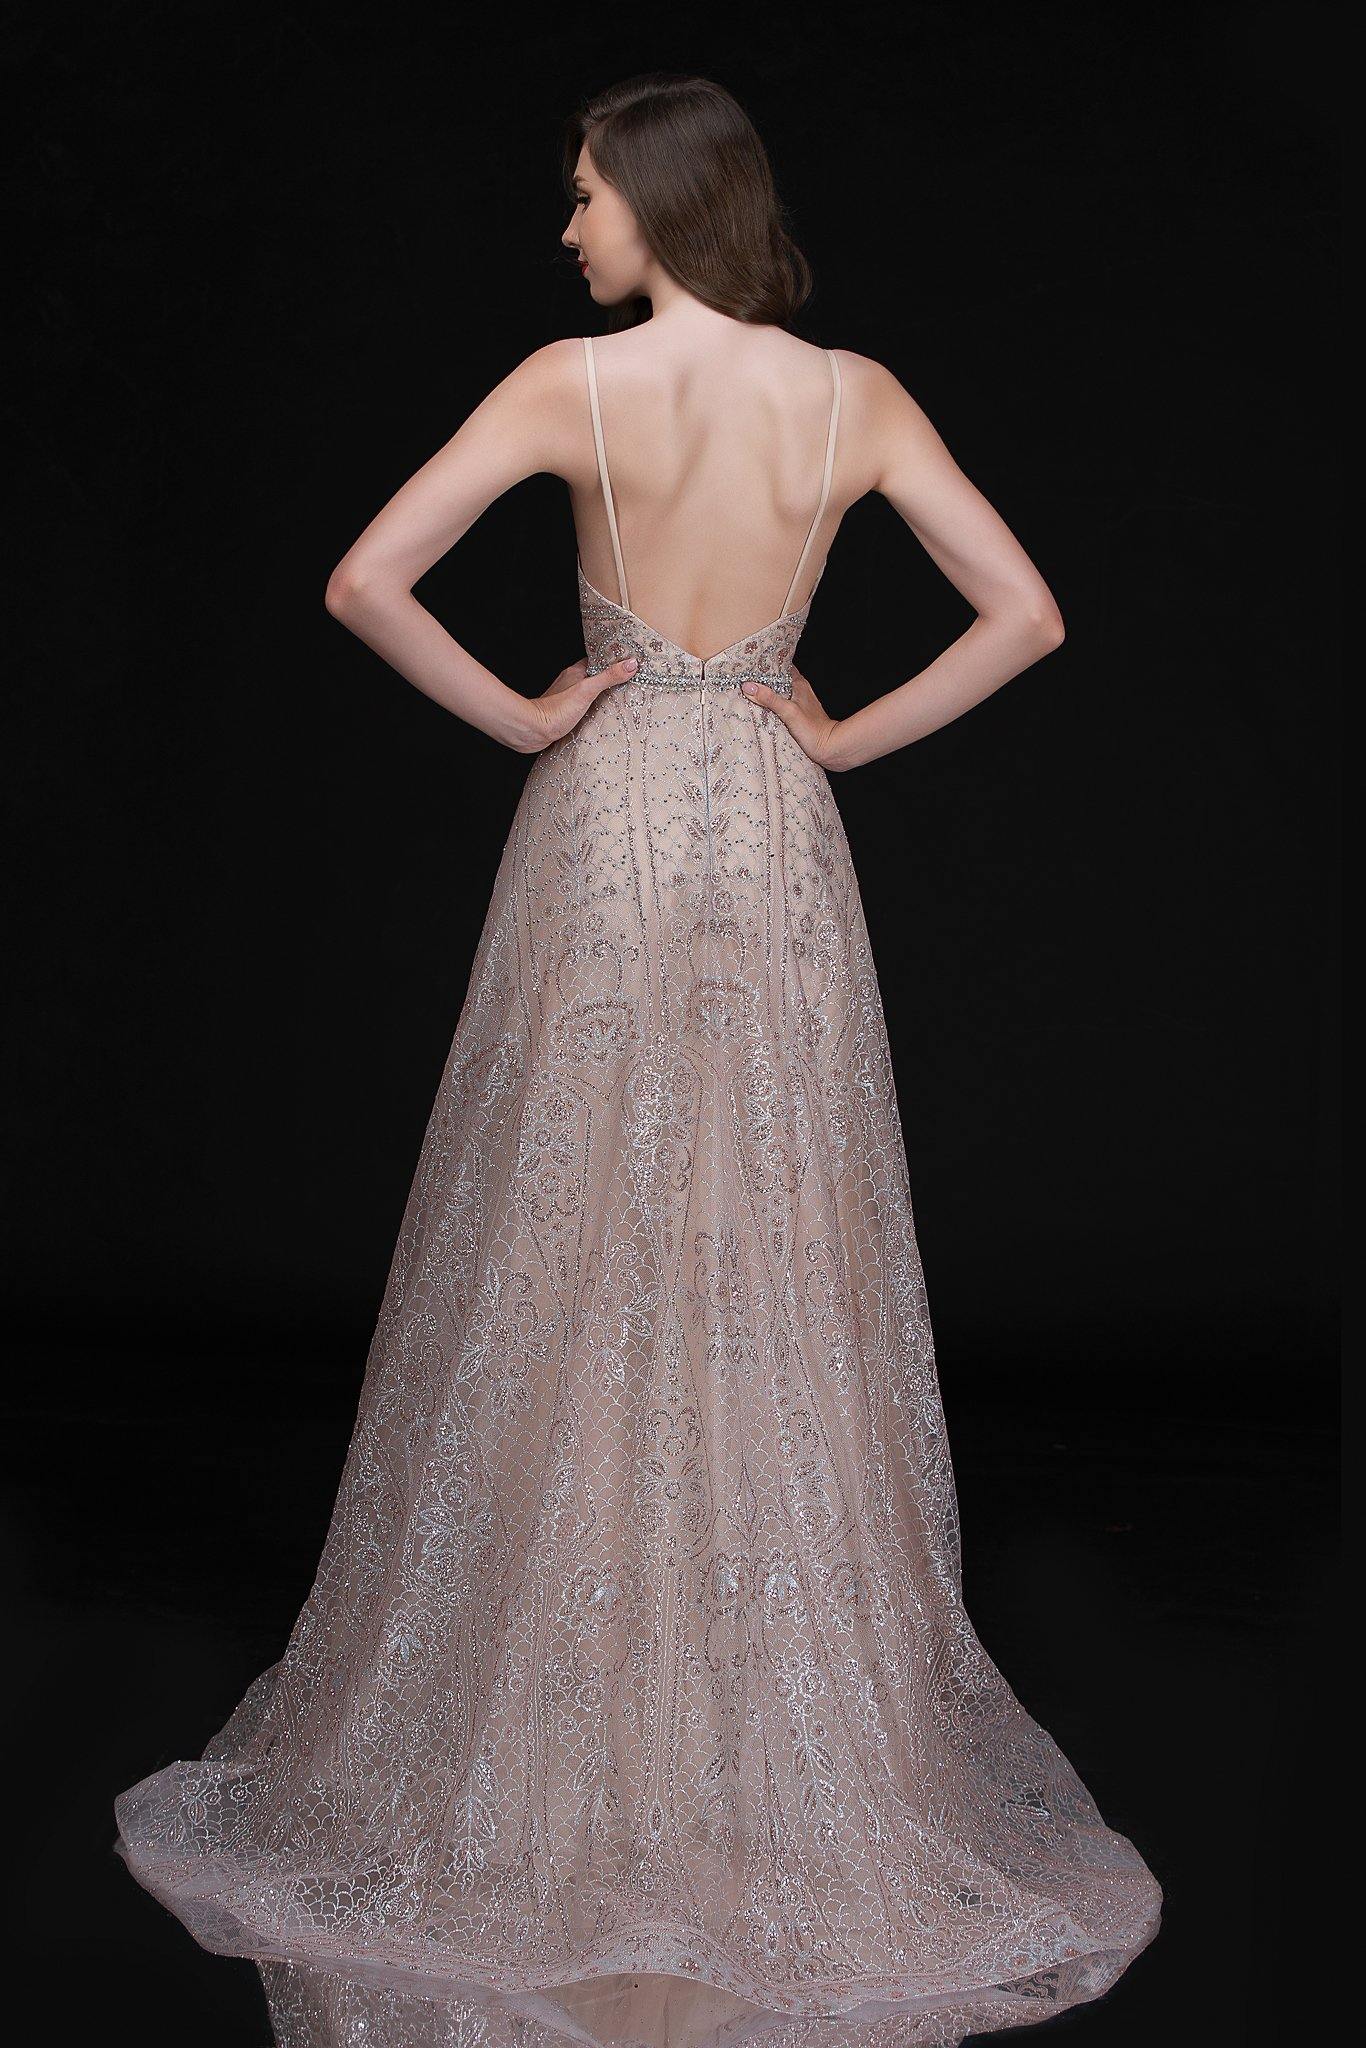 Nina Canacci Prom Long Metallic Evening Dress 8187 - The Dress Outlet